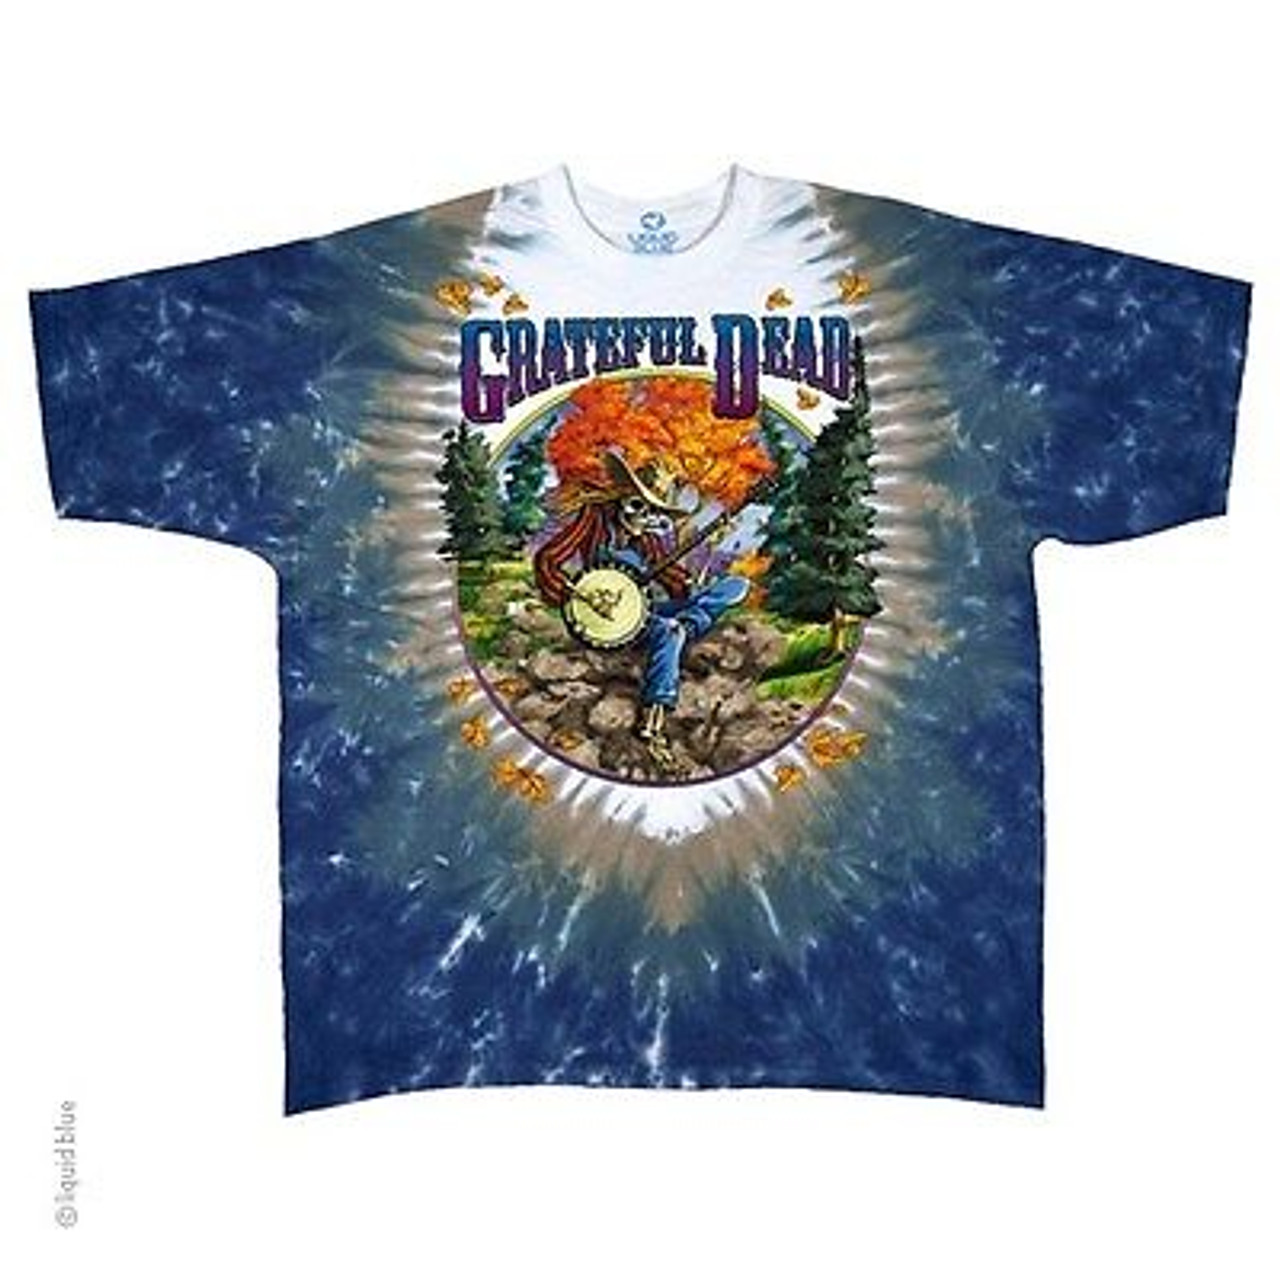 Grateful Dead Banjo Country Skeleton Rock Music Tie Dye Mens T Shirt M-6xl - M